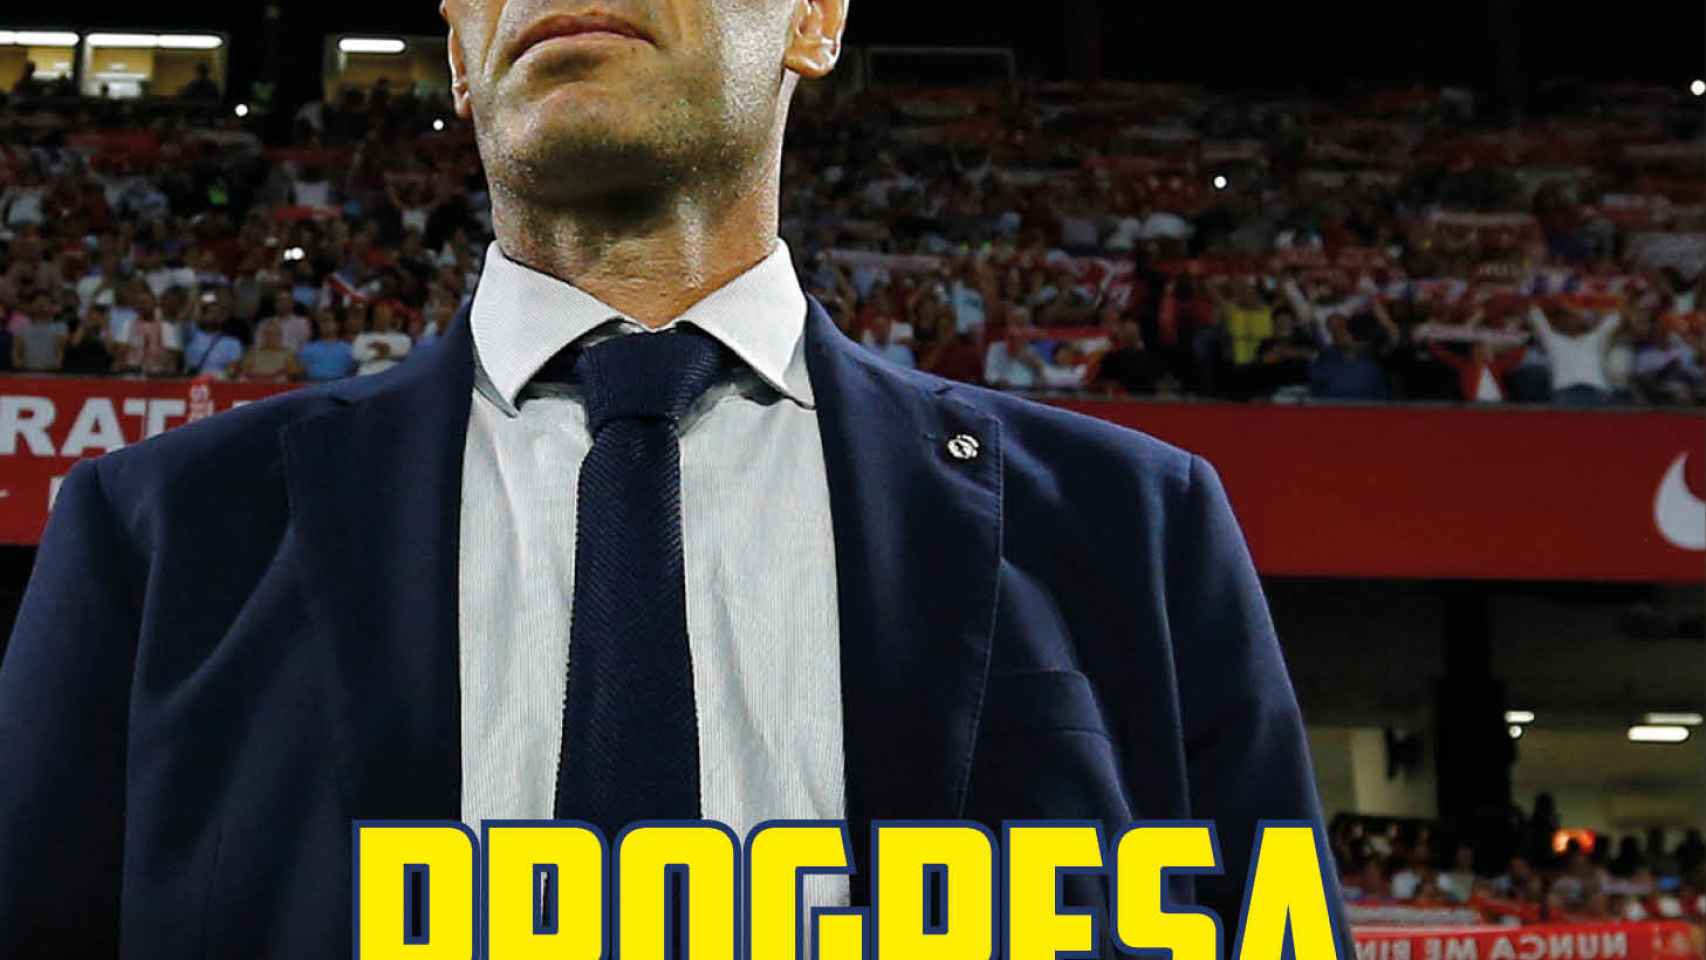 La portada de El Bernabéu (30/09/2019)